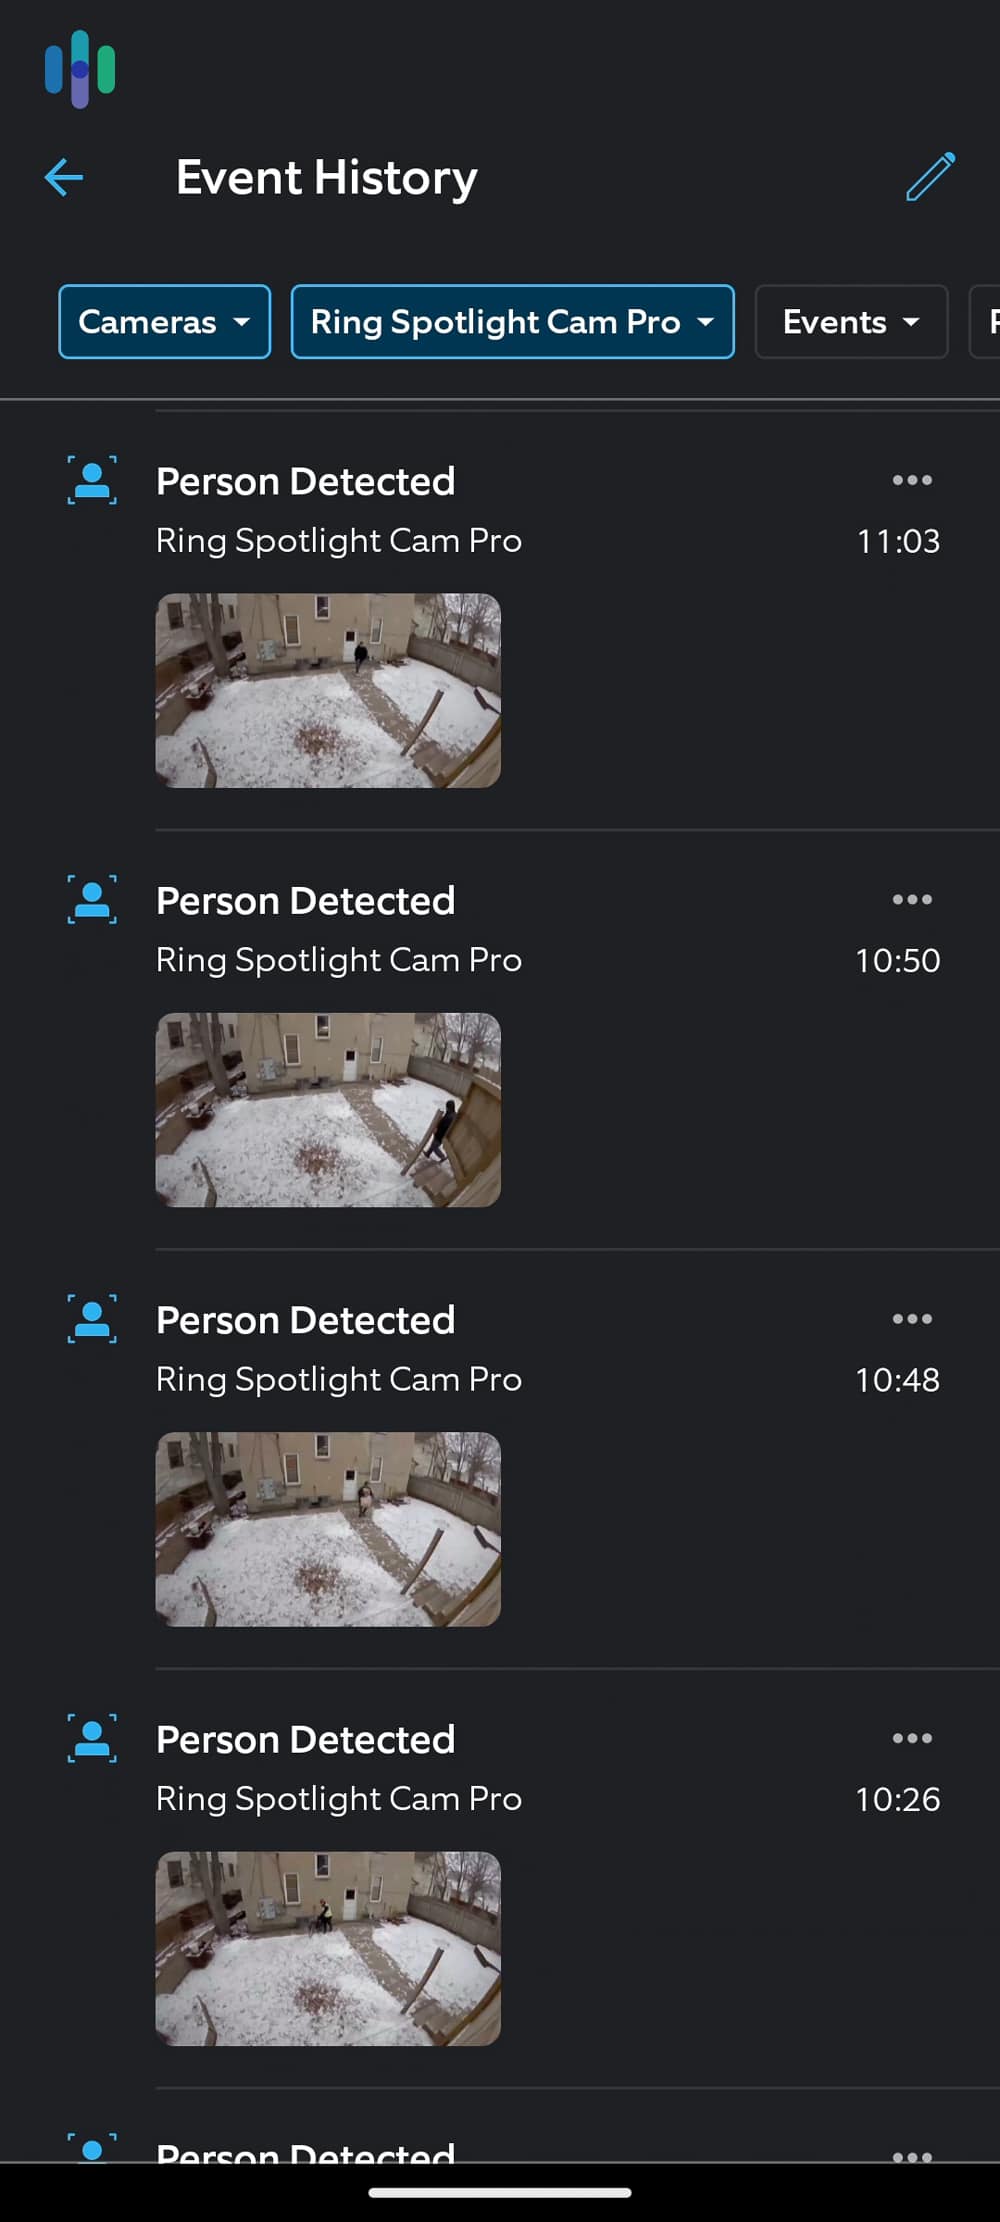 Ring Spotlight Cam Pro event history on the Ring app